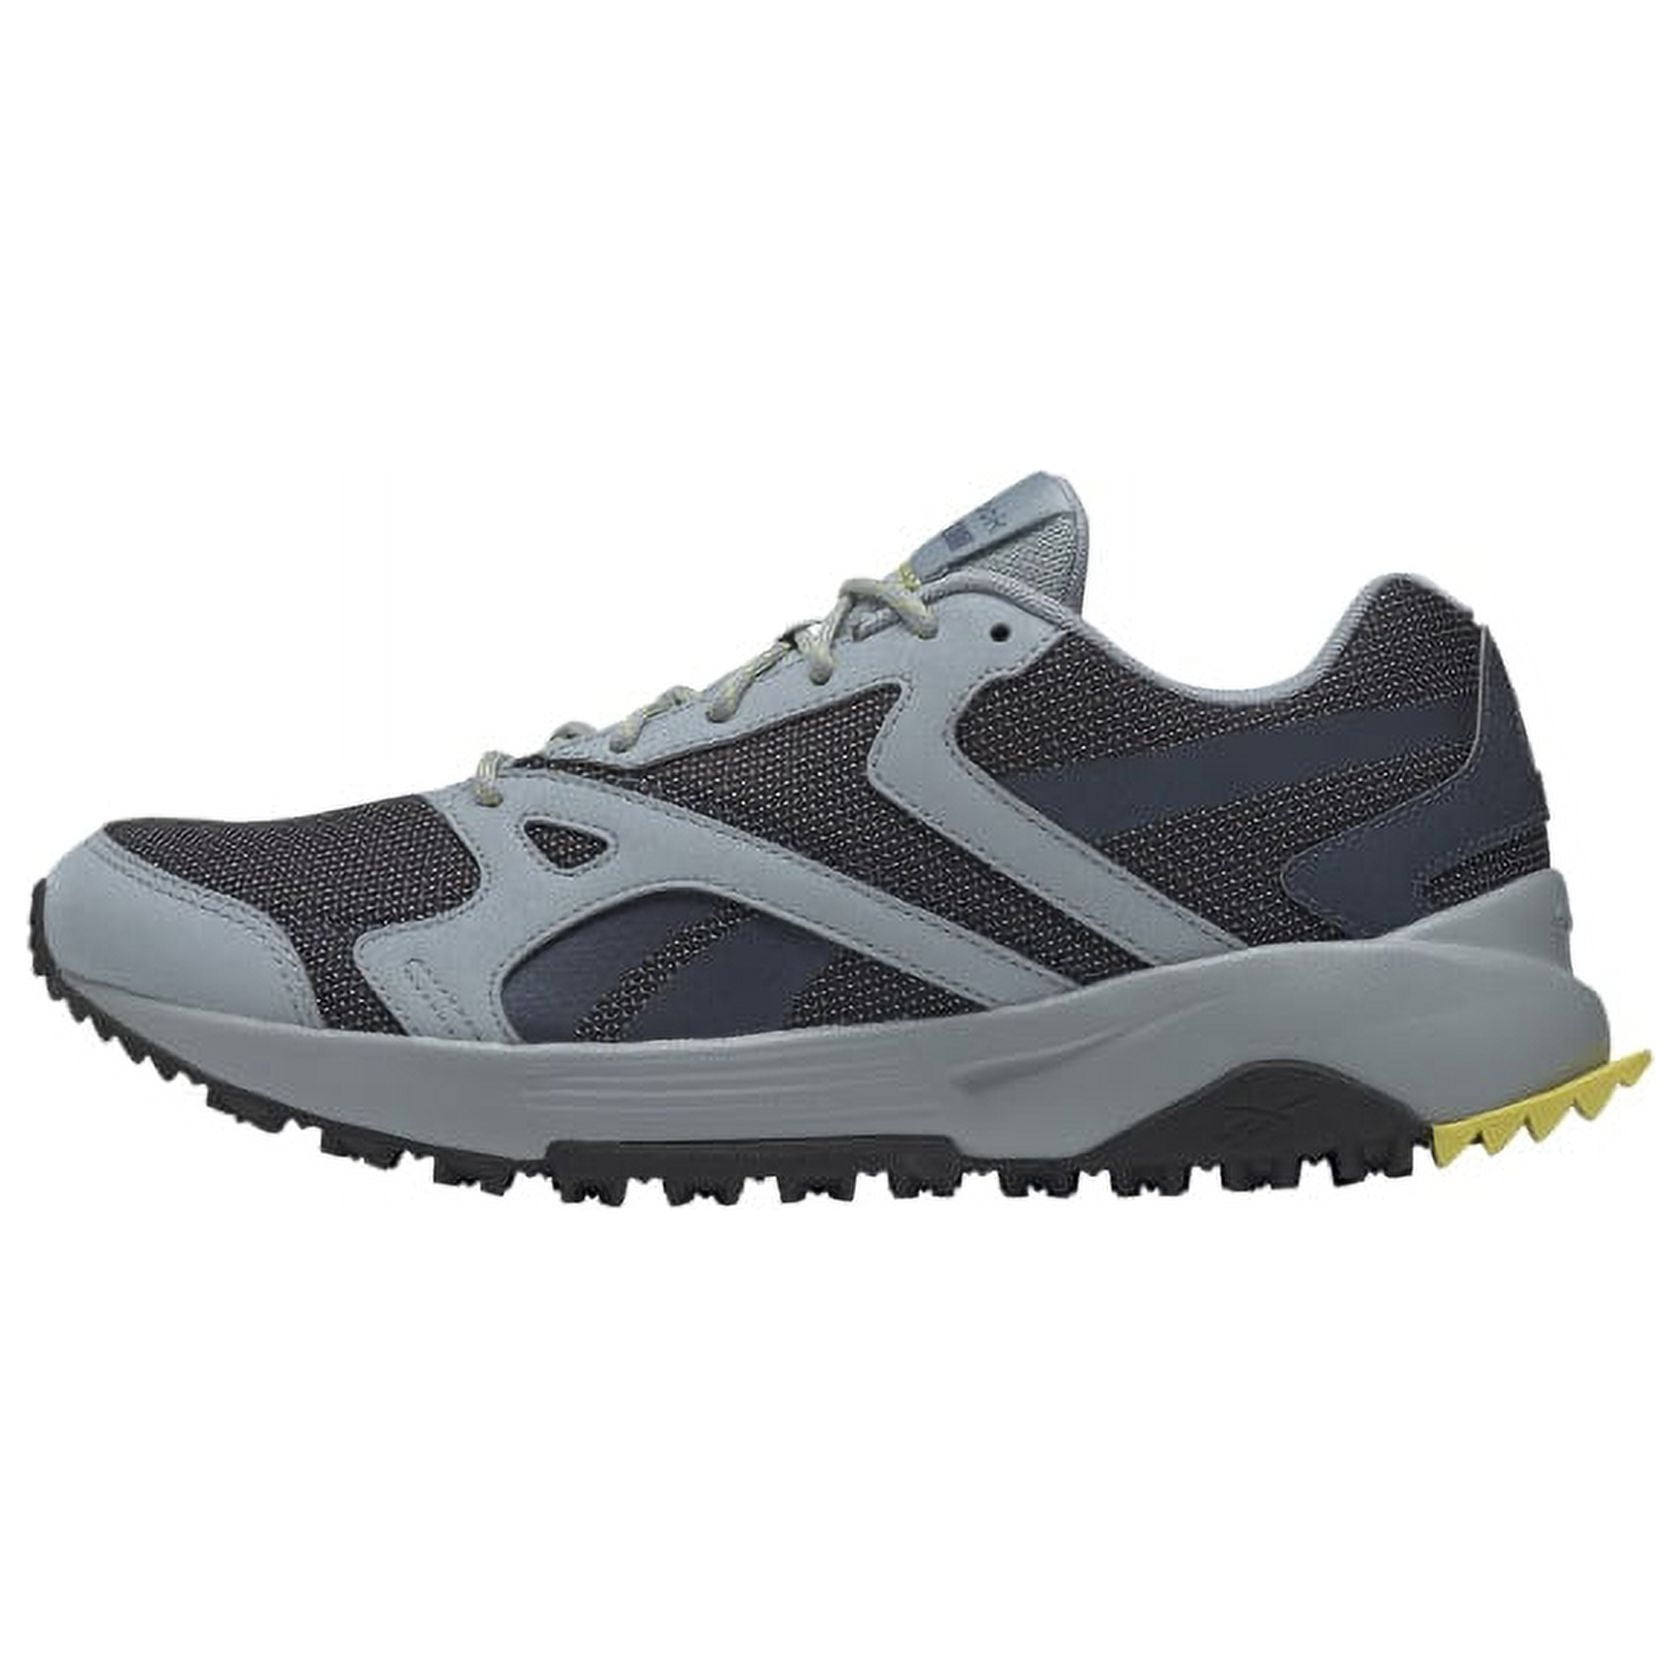 Reebok Lavante Terrain Men's Running Shoes - Walmart.com